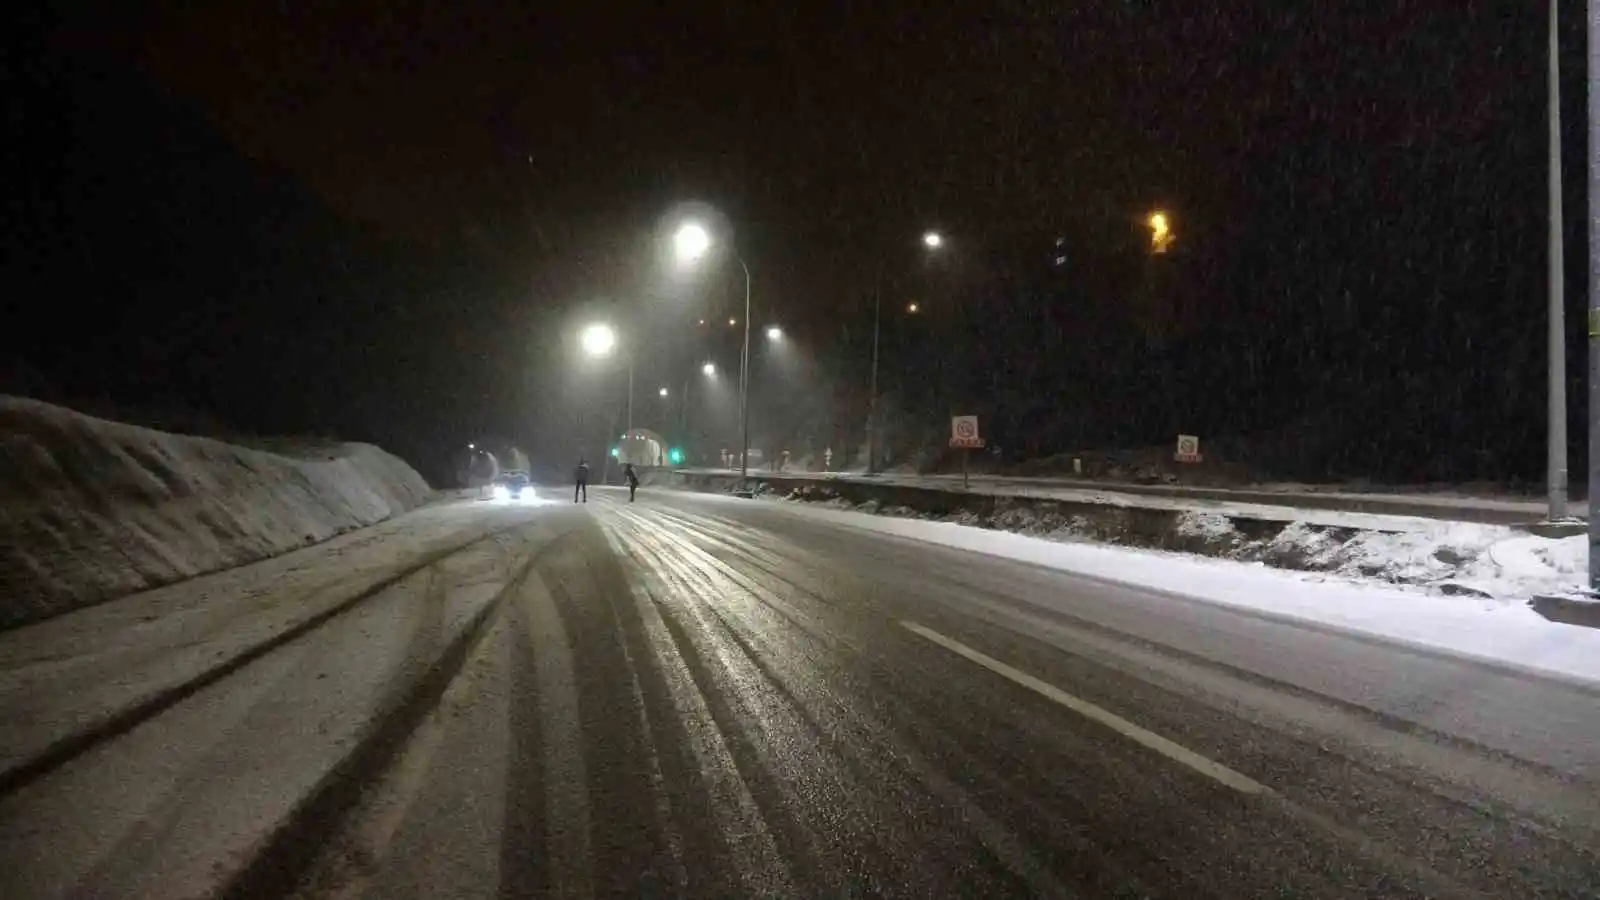 Zonguldak-Ankara Kara Yolu'nda kar yağışı etkili oldu
